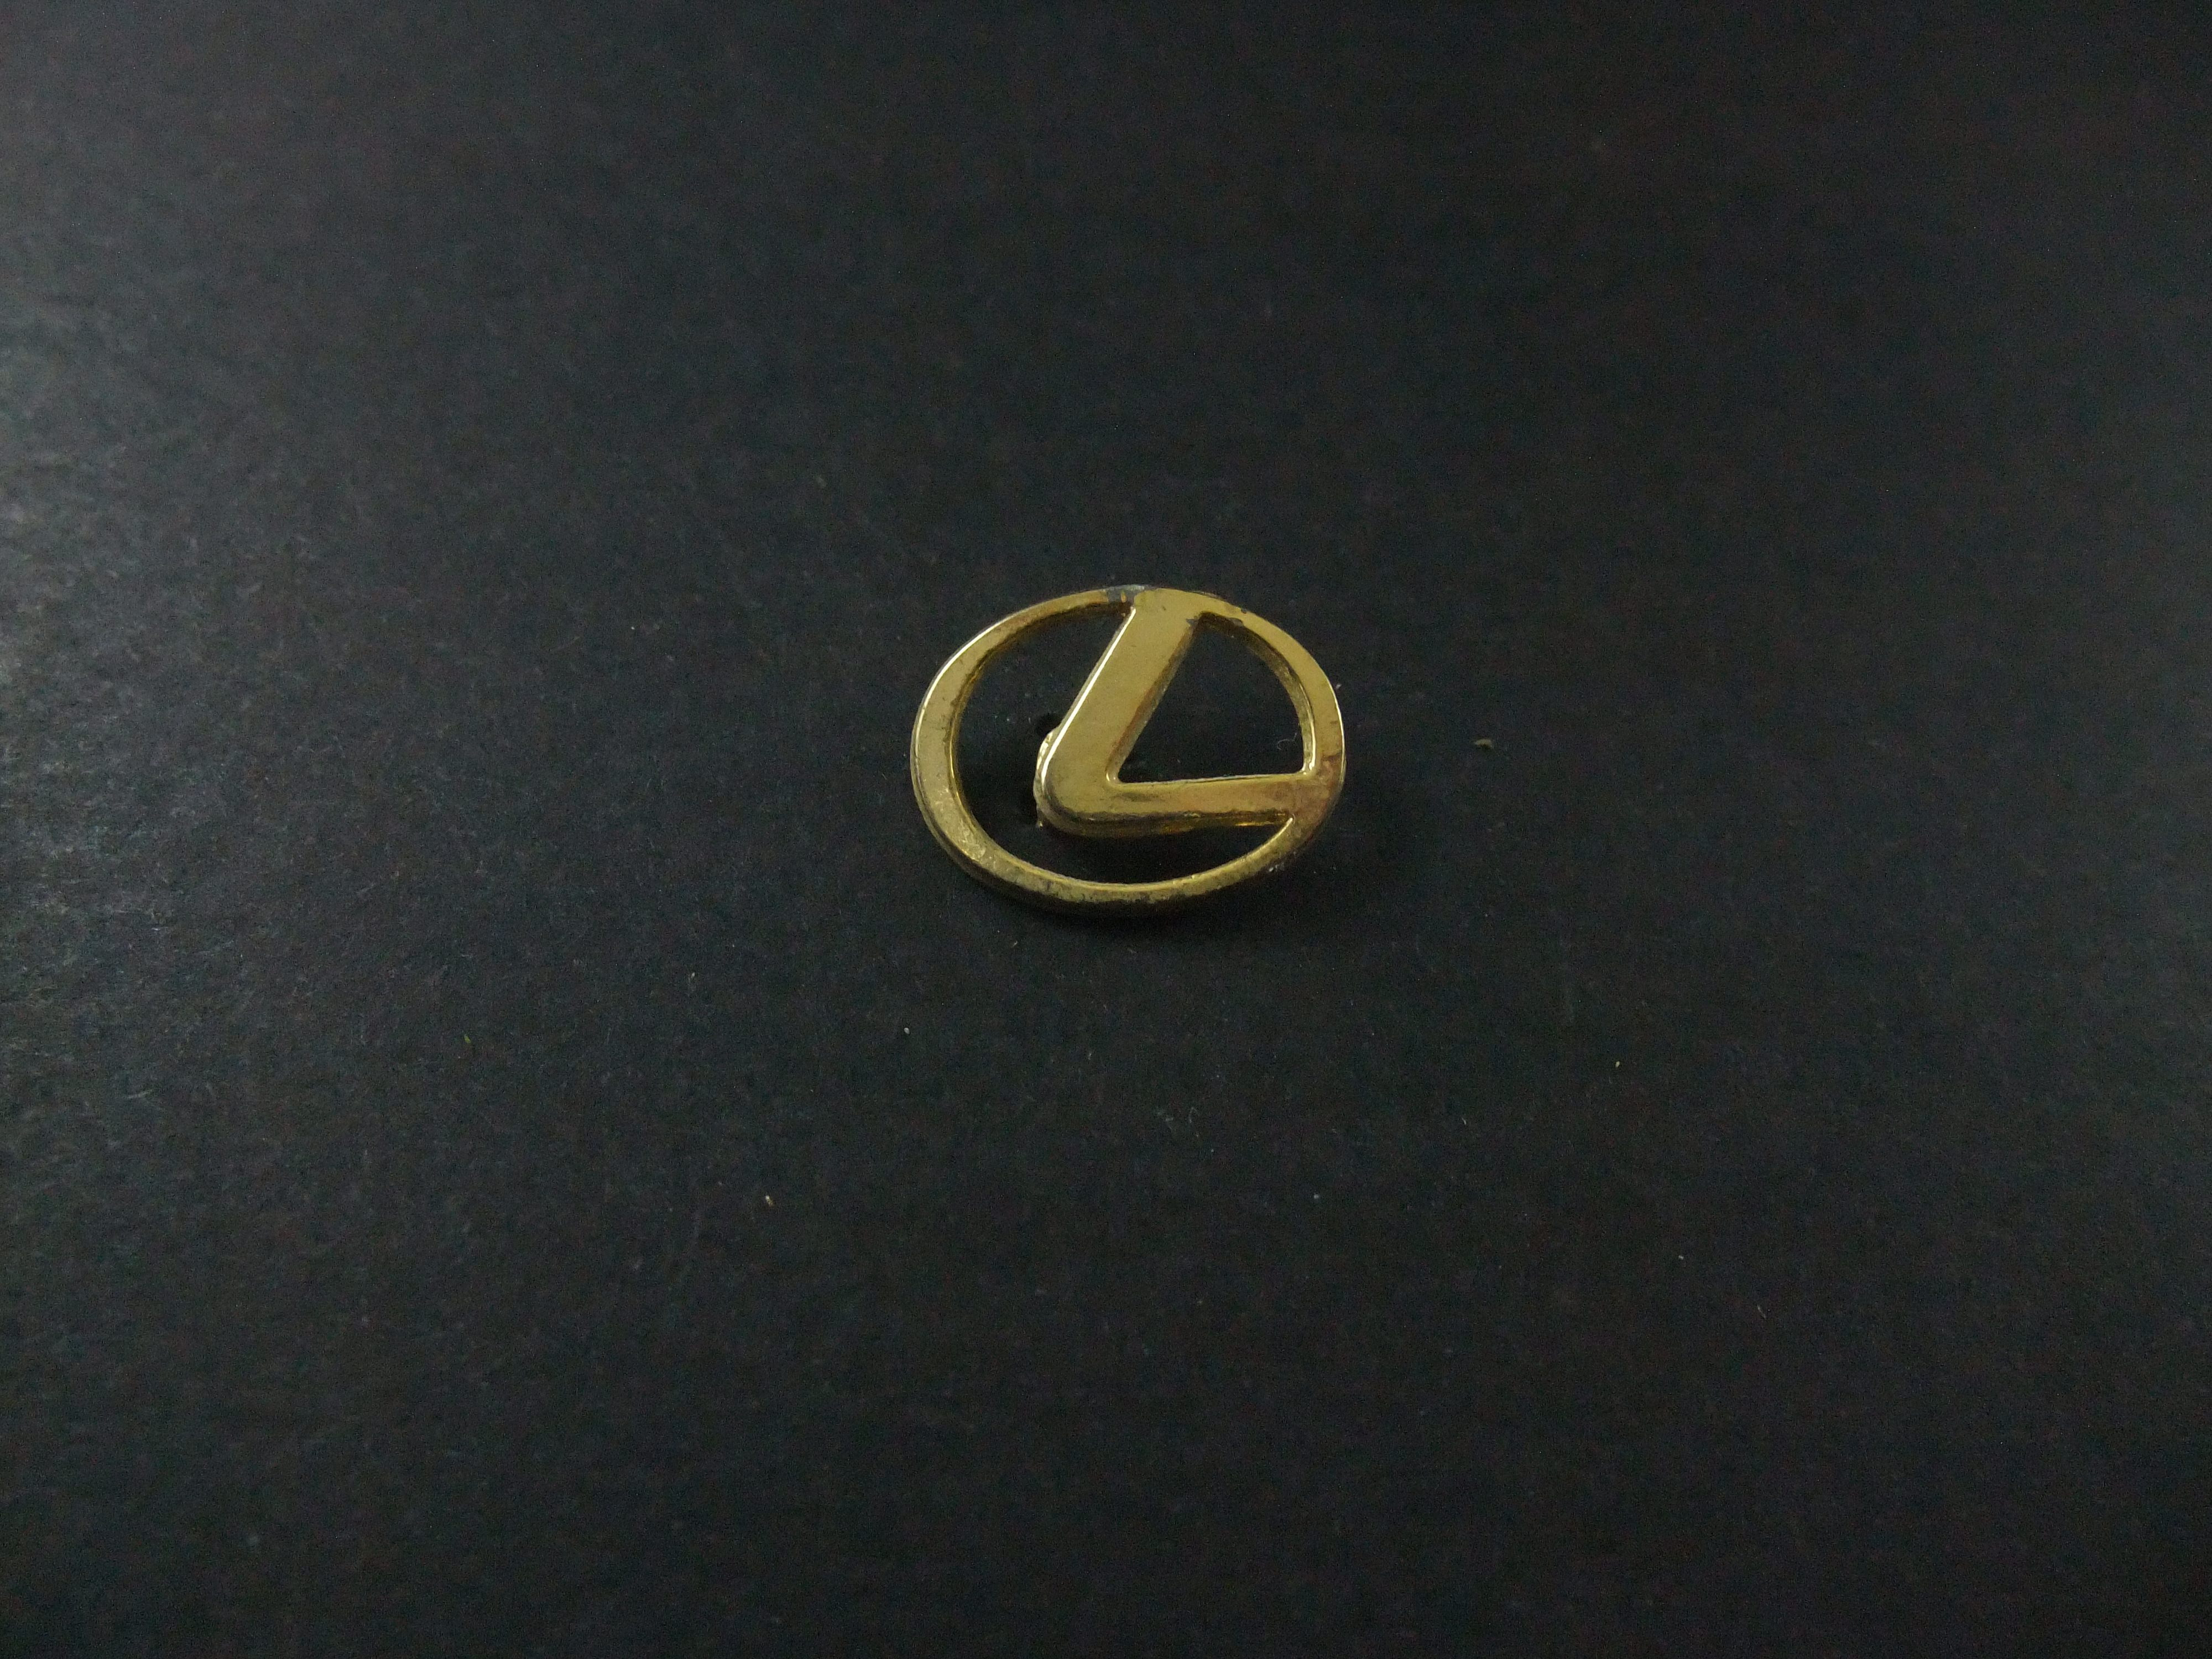 Toyota Lexus ( luxe autodivisie van Toyota), logo goudkleurig